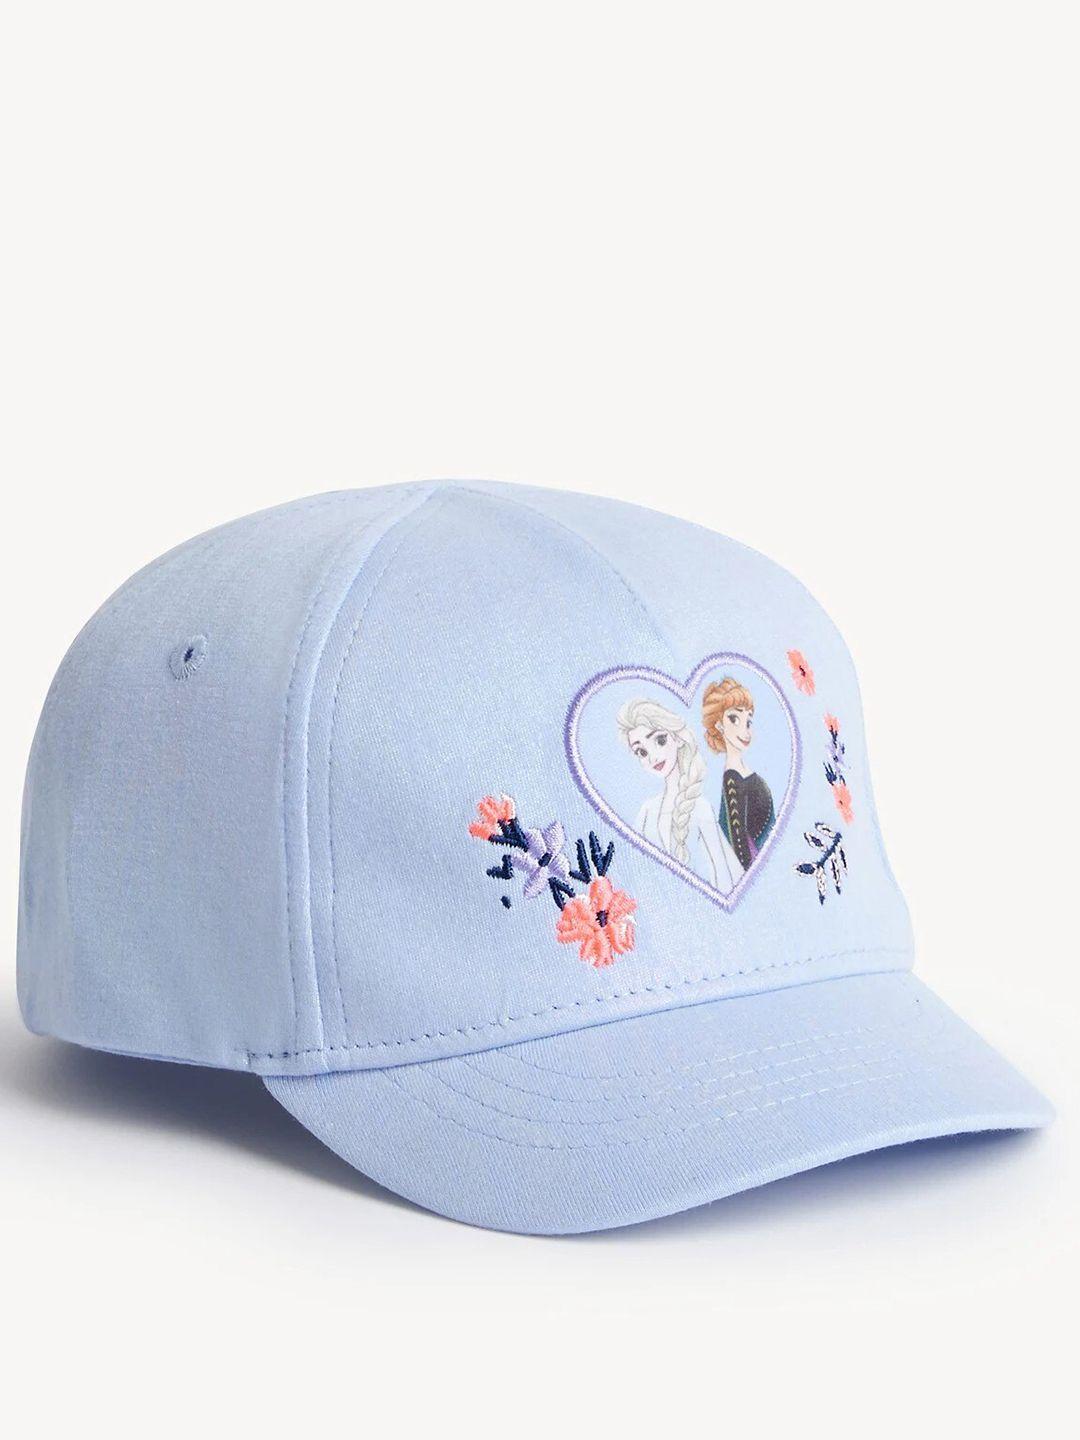 marks & spencer girls blue & red embroidered baseball cap